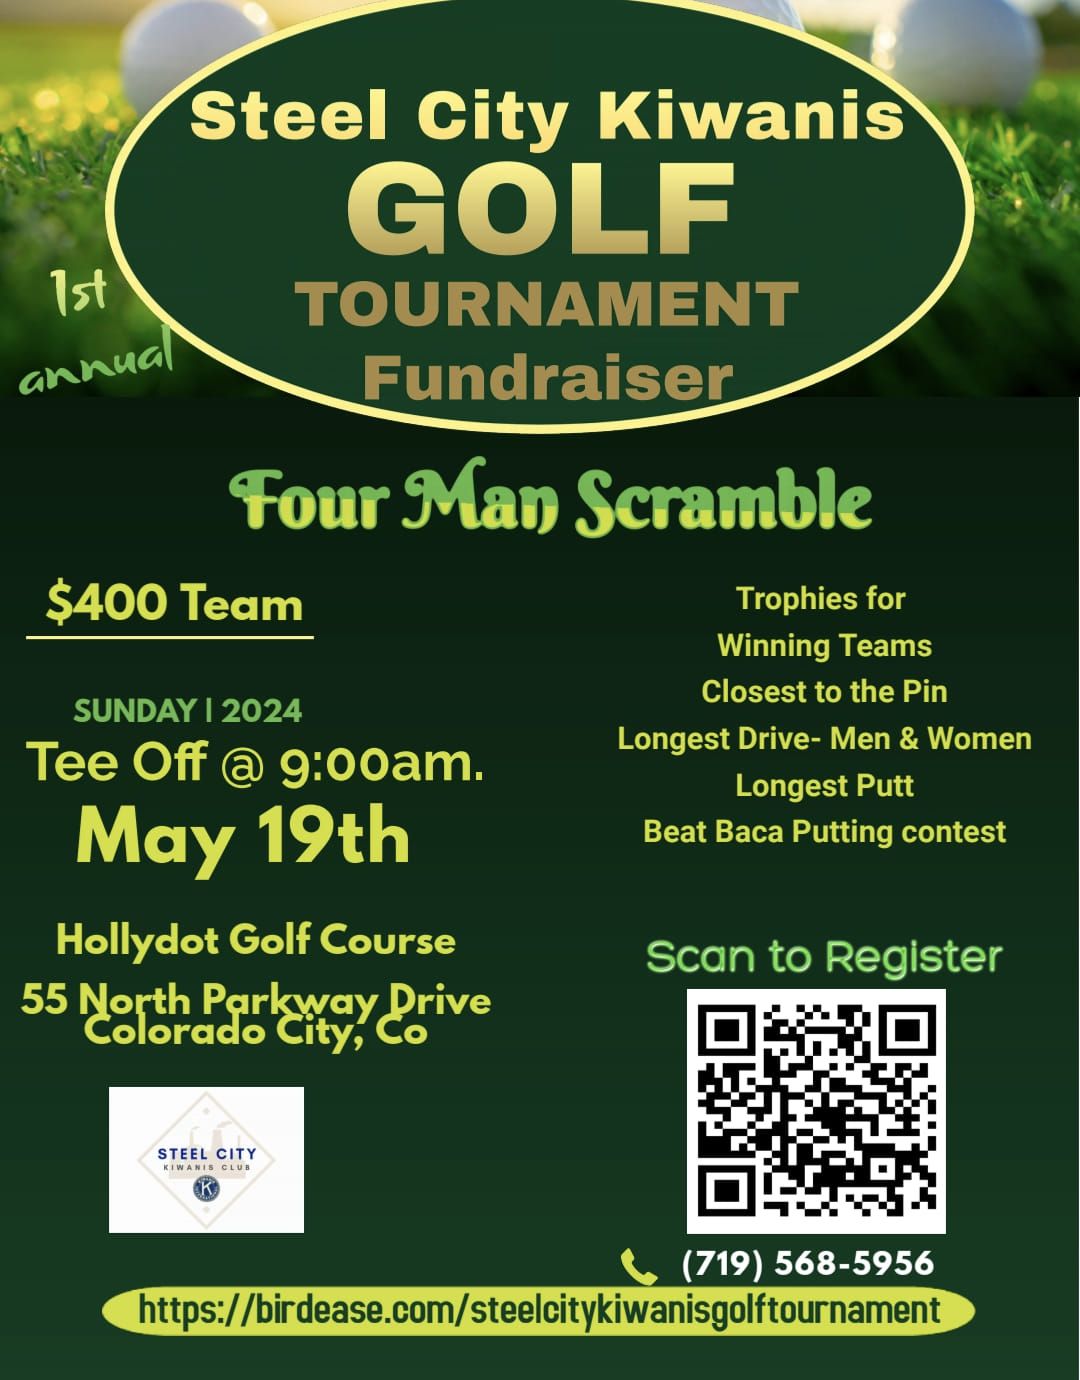 Steel City Kiwanis Club Golf Tournament 